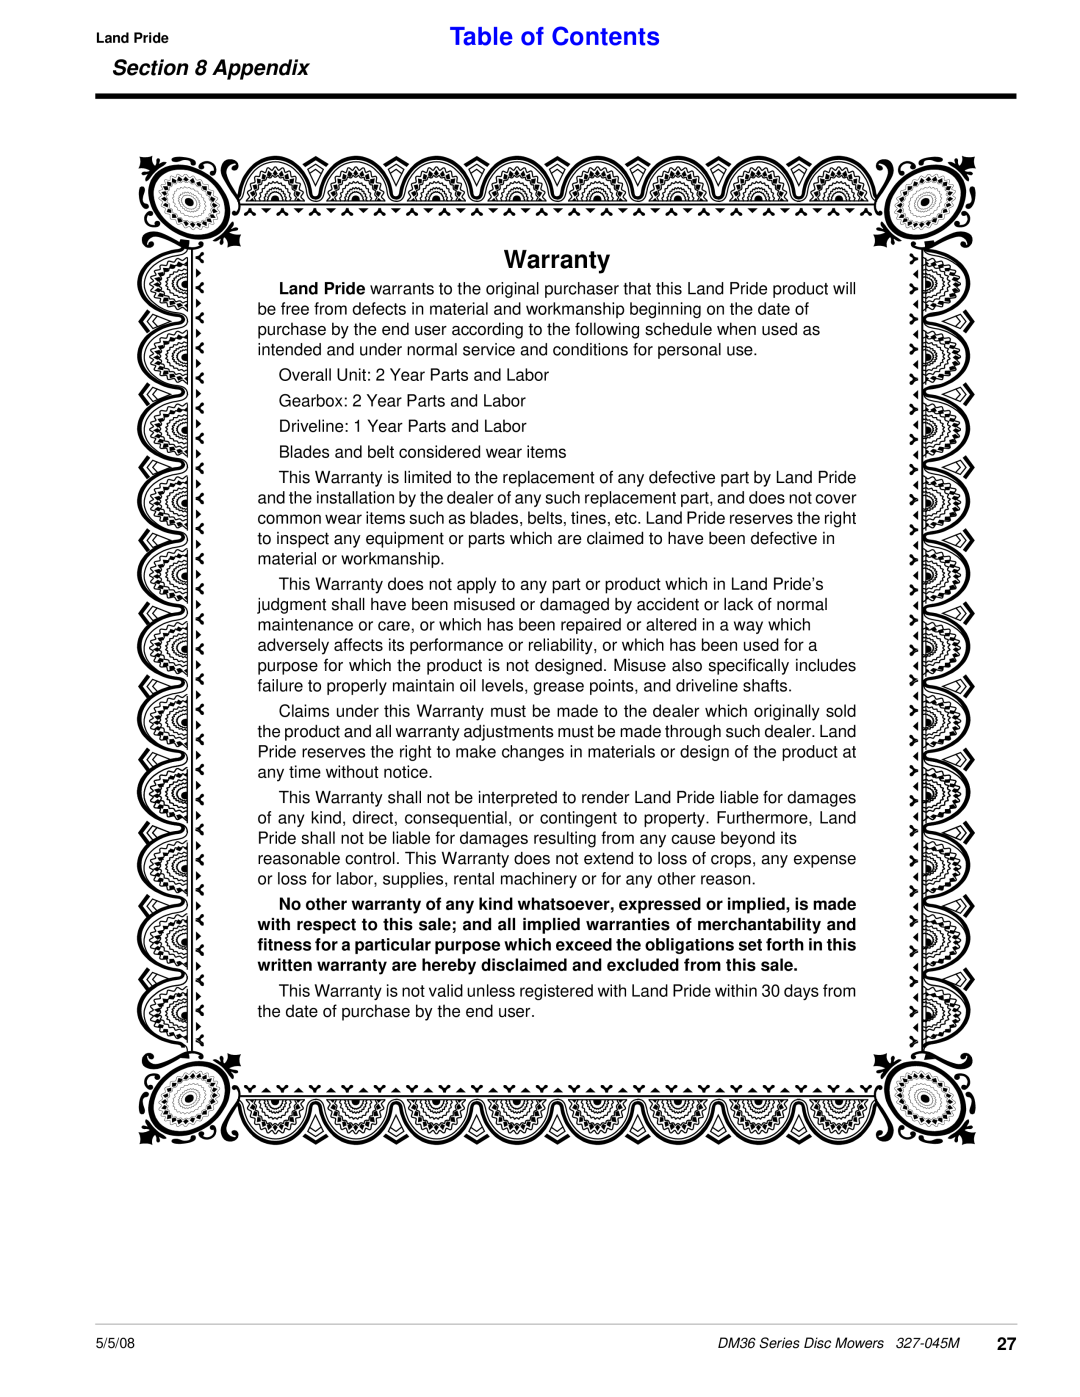 Land Pride DM36 Series manual Warranty, Table of Contents, Appendix 